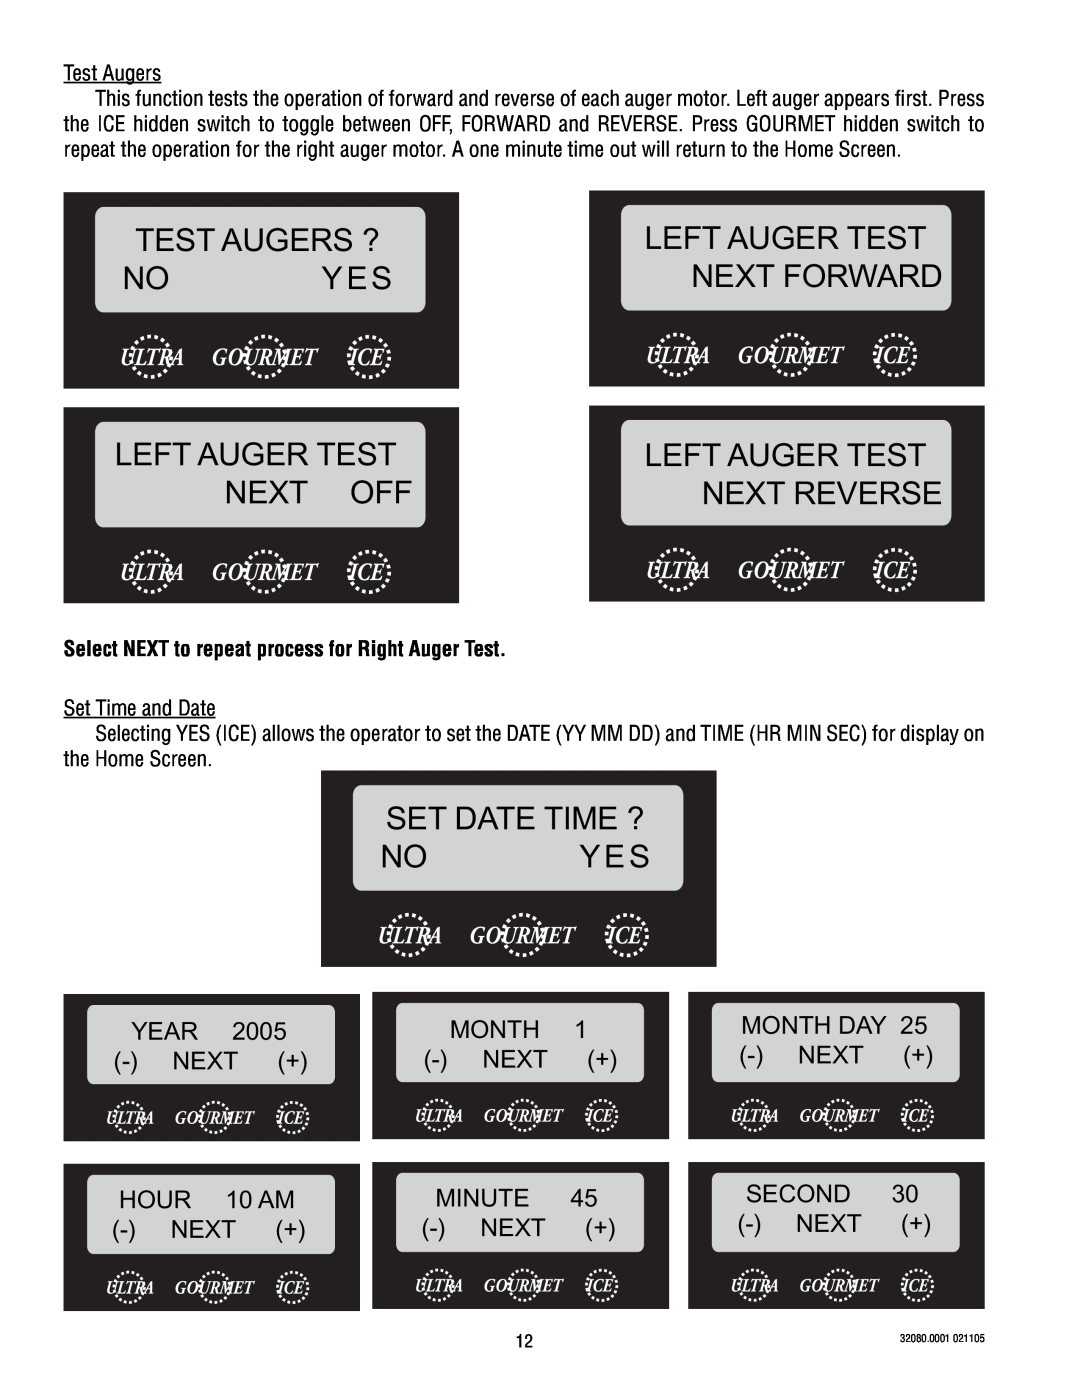 Bunn 2 manual Test Augers ?, Left Auger Test, Next Off, Next Reverse, Set Date Time ? No Yes, Next Forward 